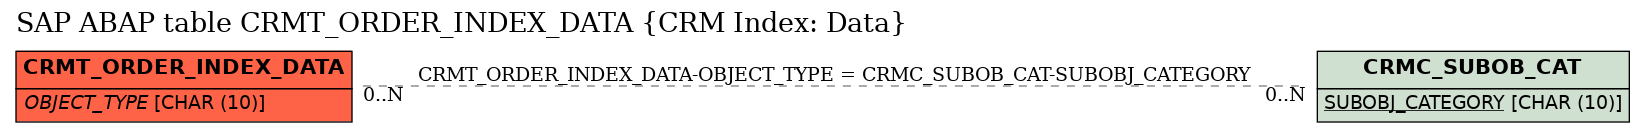 E-R Diagram for table CRMT_ORDER_INDEX_DATA (CRM Index: Data)